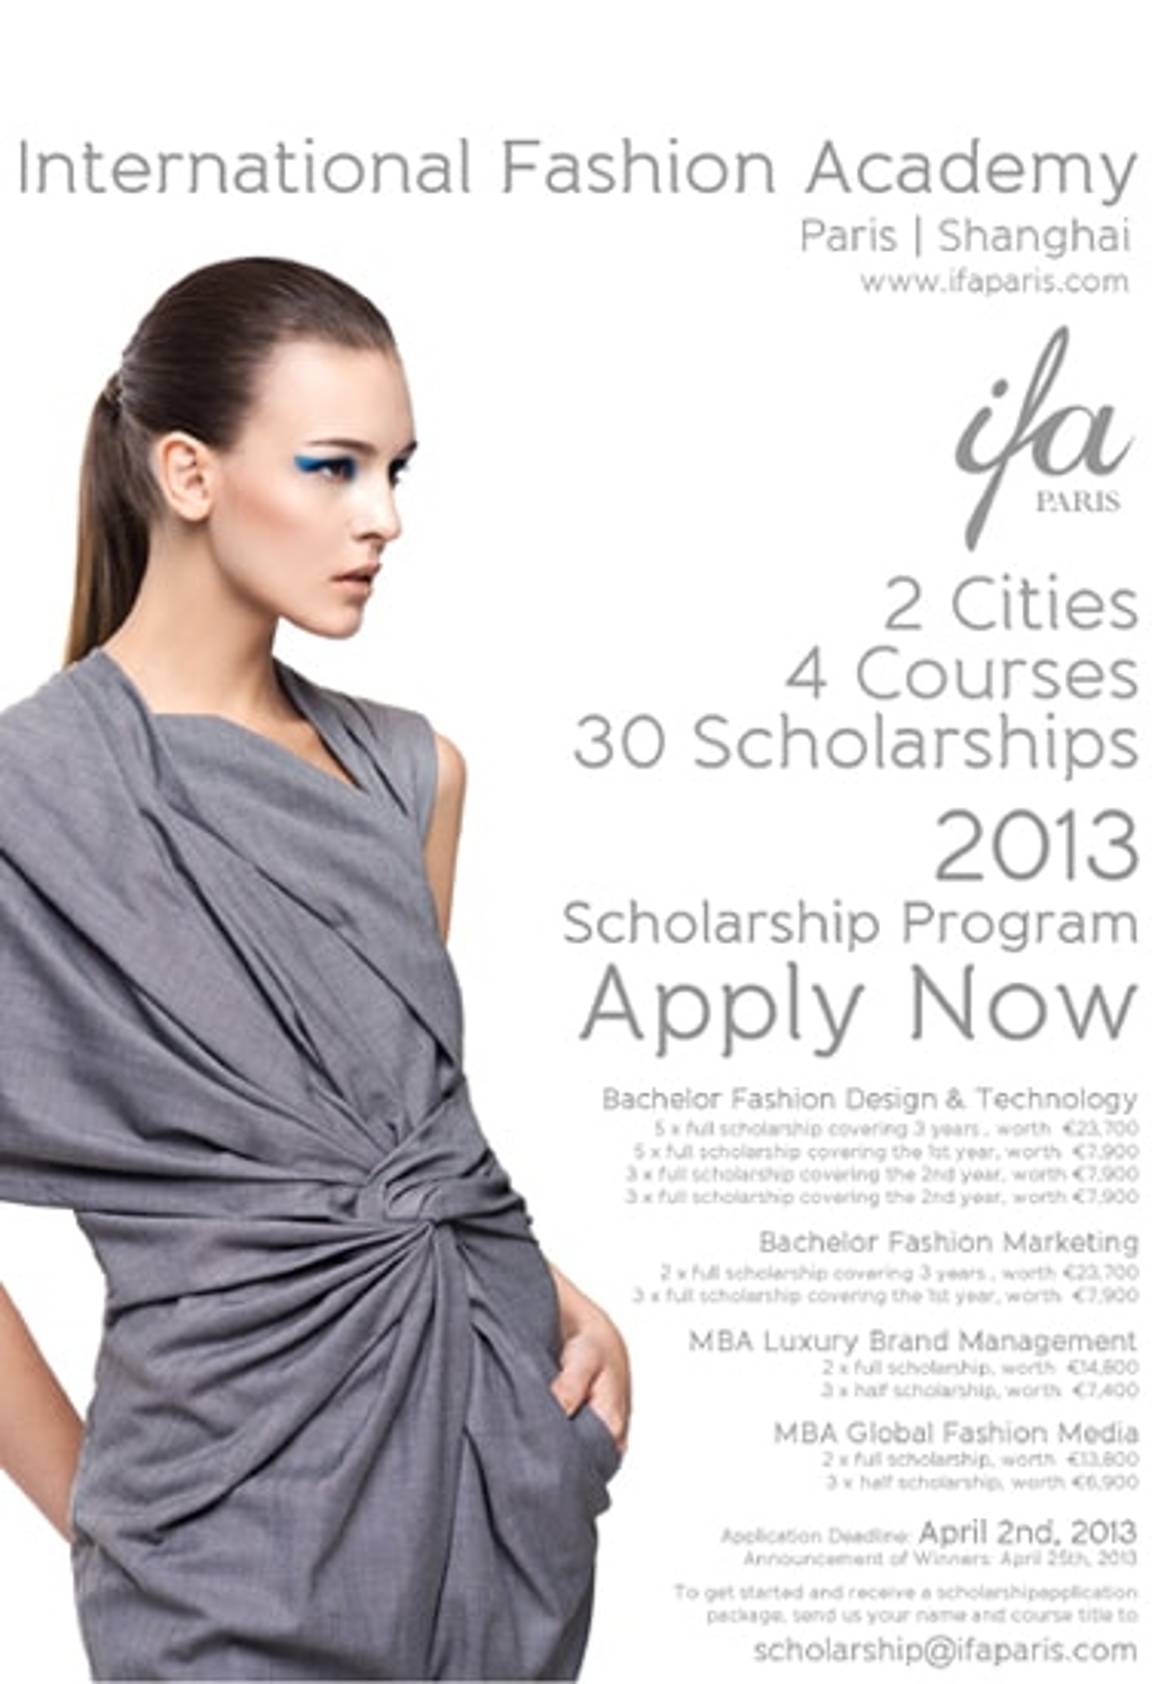 IFA Paris announces new scholarships for 2013